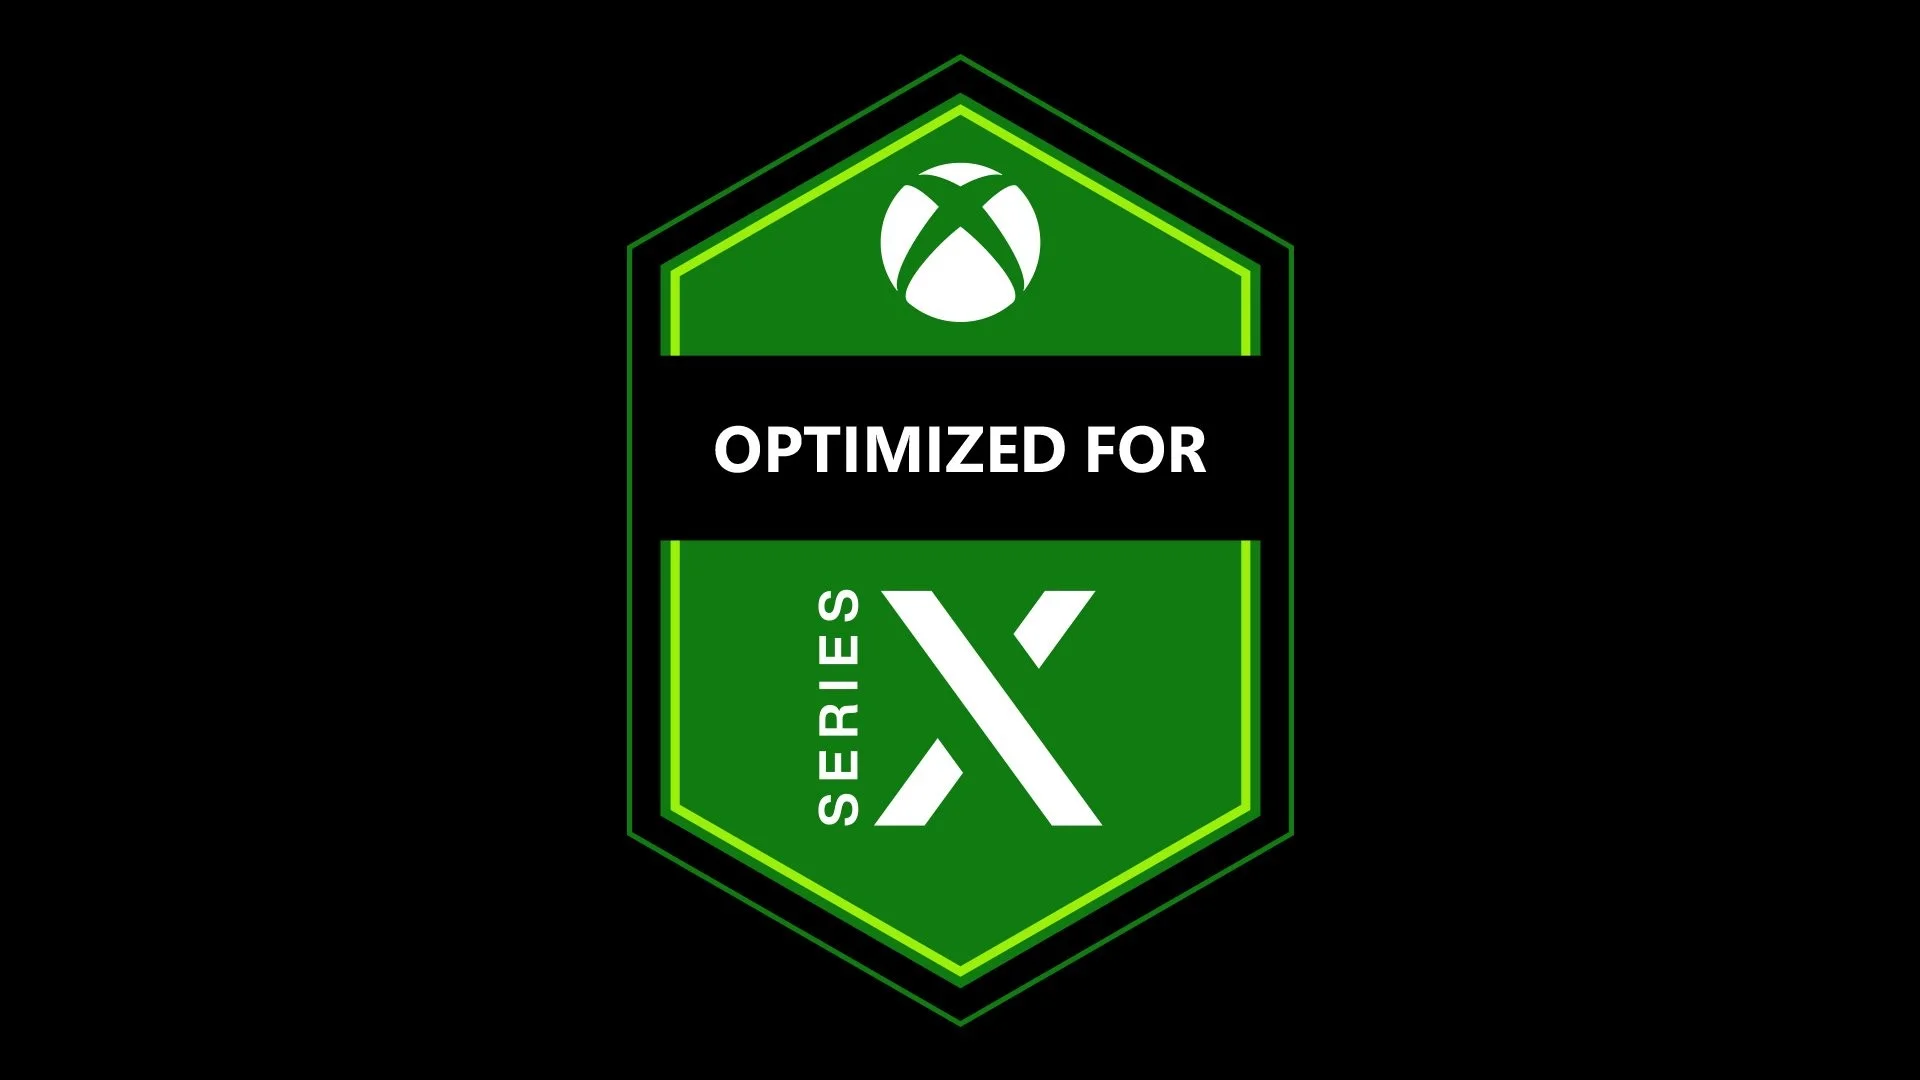 Все игры на презентации Inside Xbox будут оптимизированы для Xbox Series X - фото 1